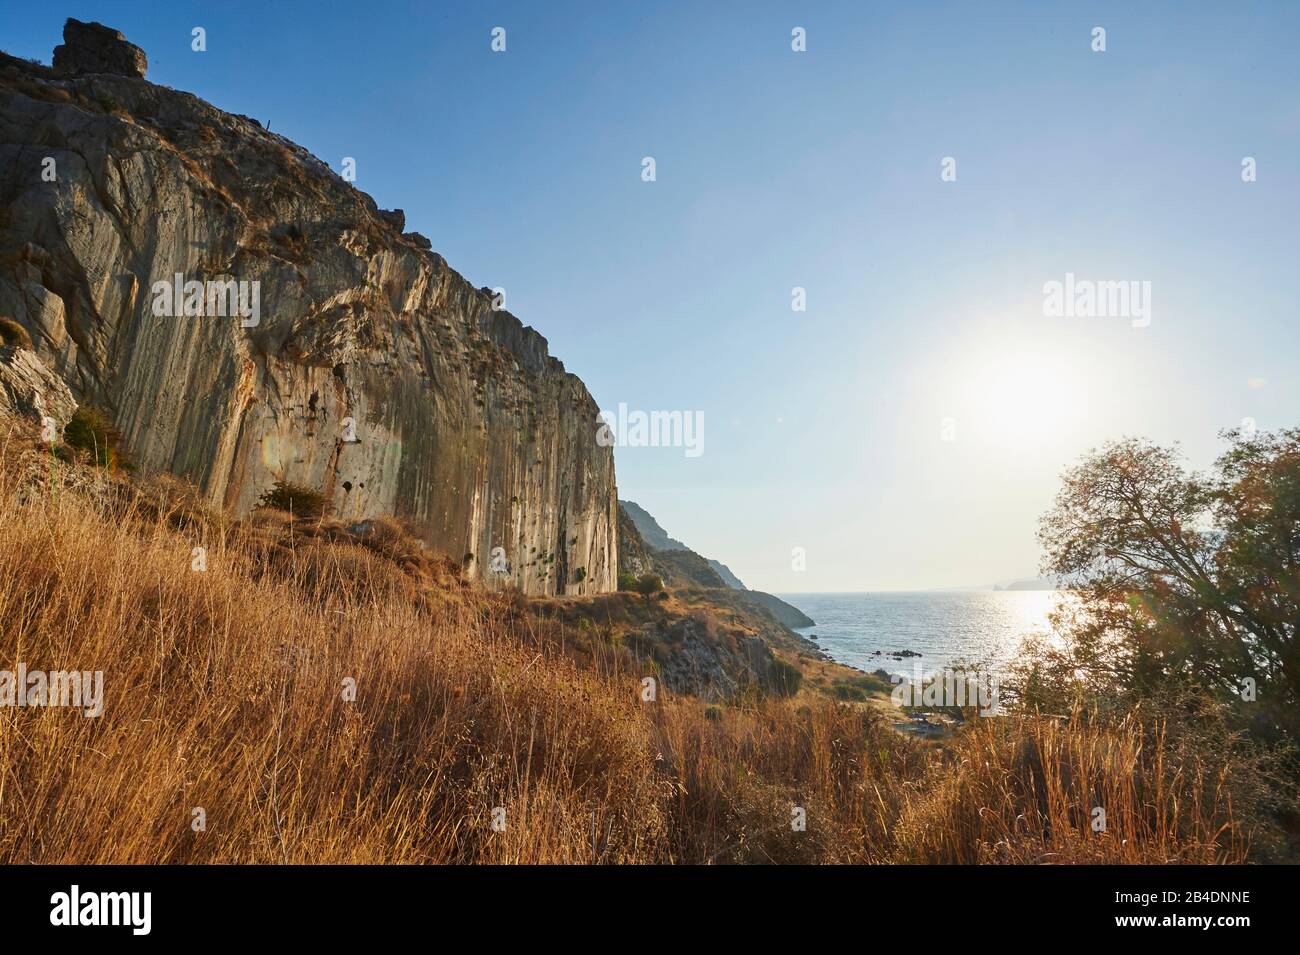 Landscape, rock wall at Paligremnos beach on the coast, vegetation, Crete, Greece Stock Photo